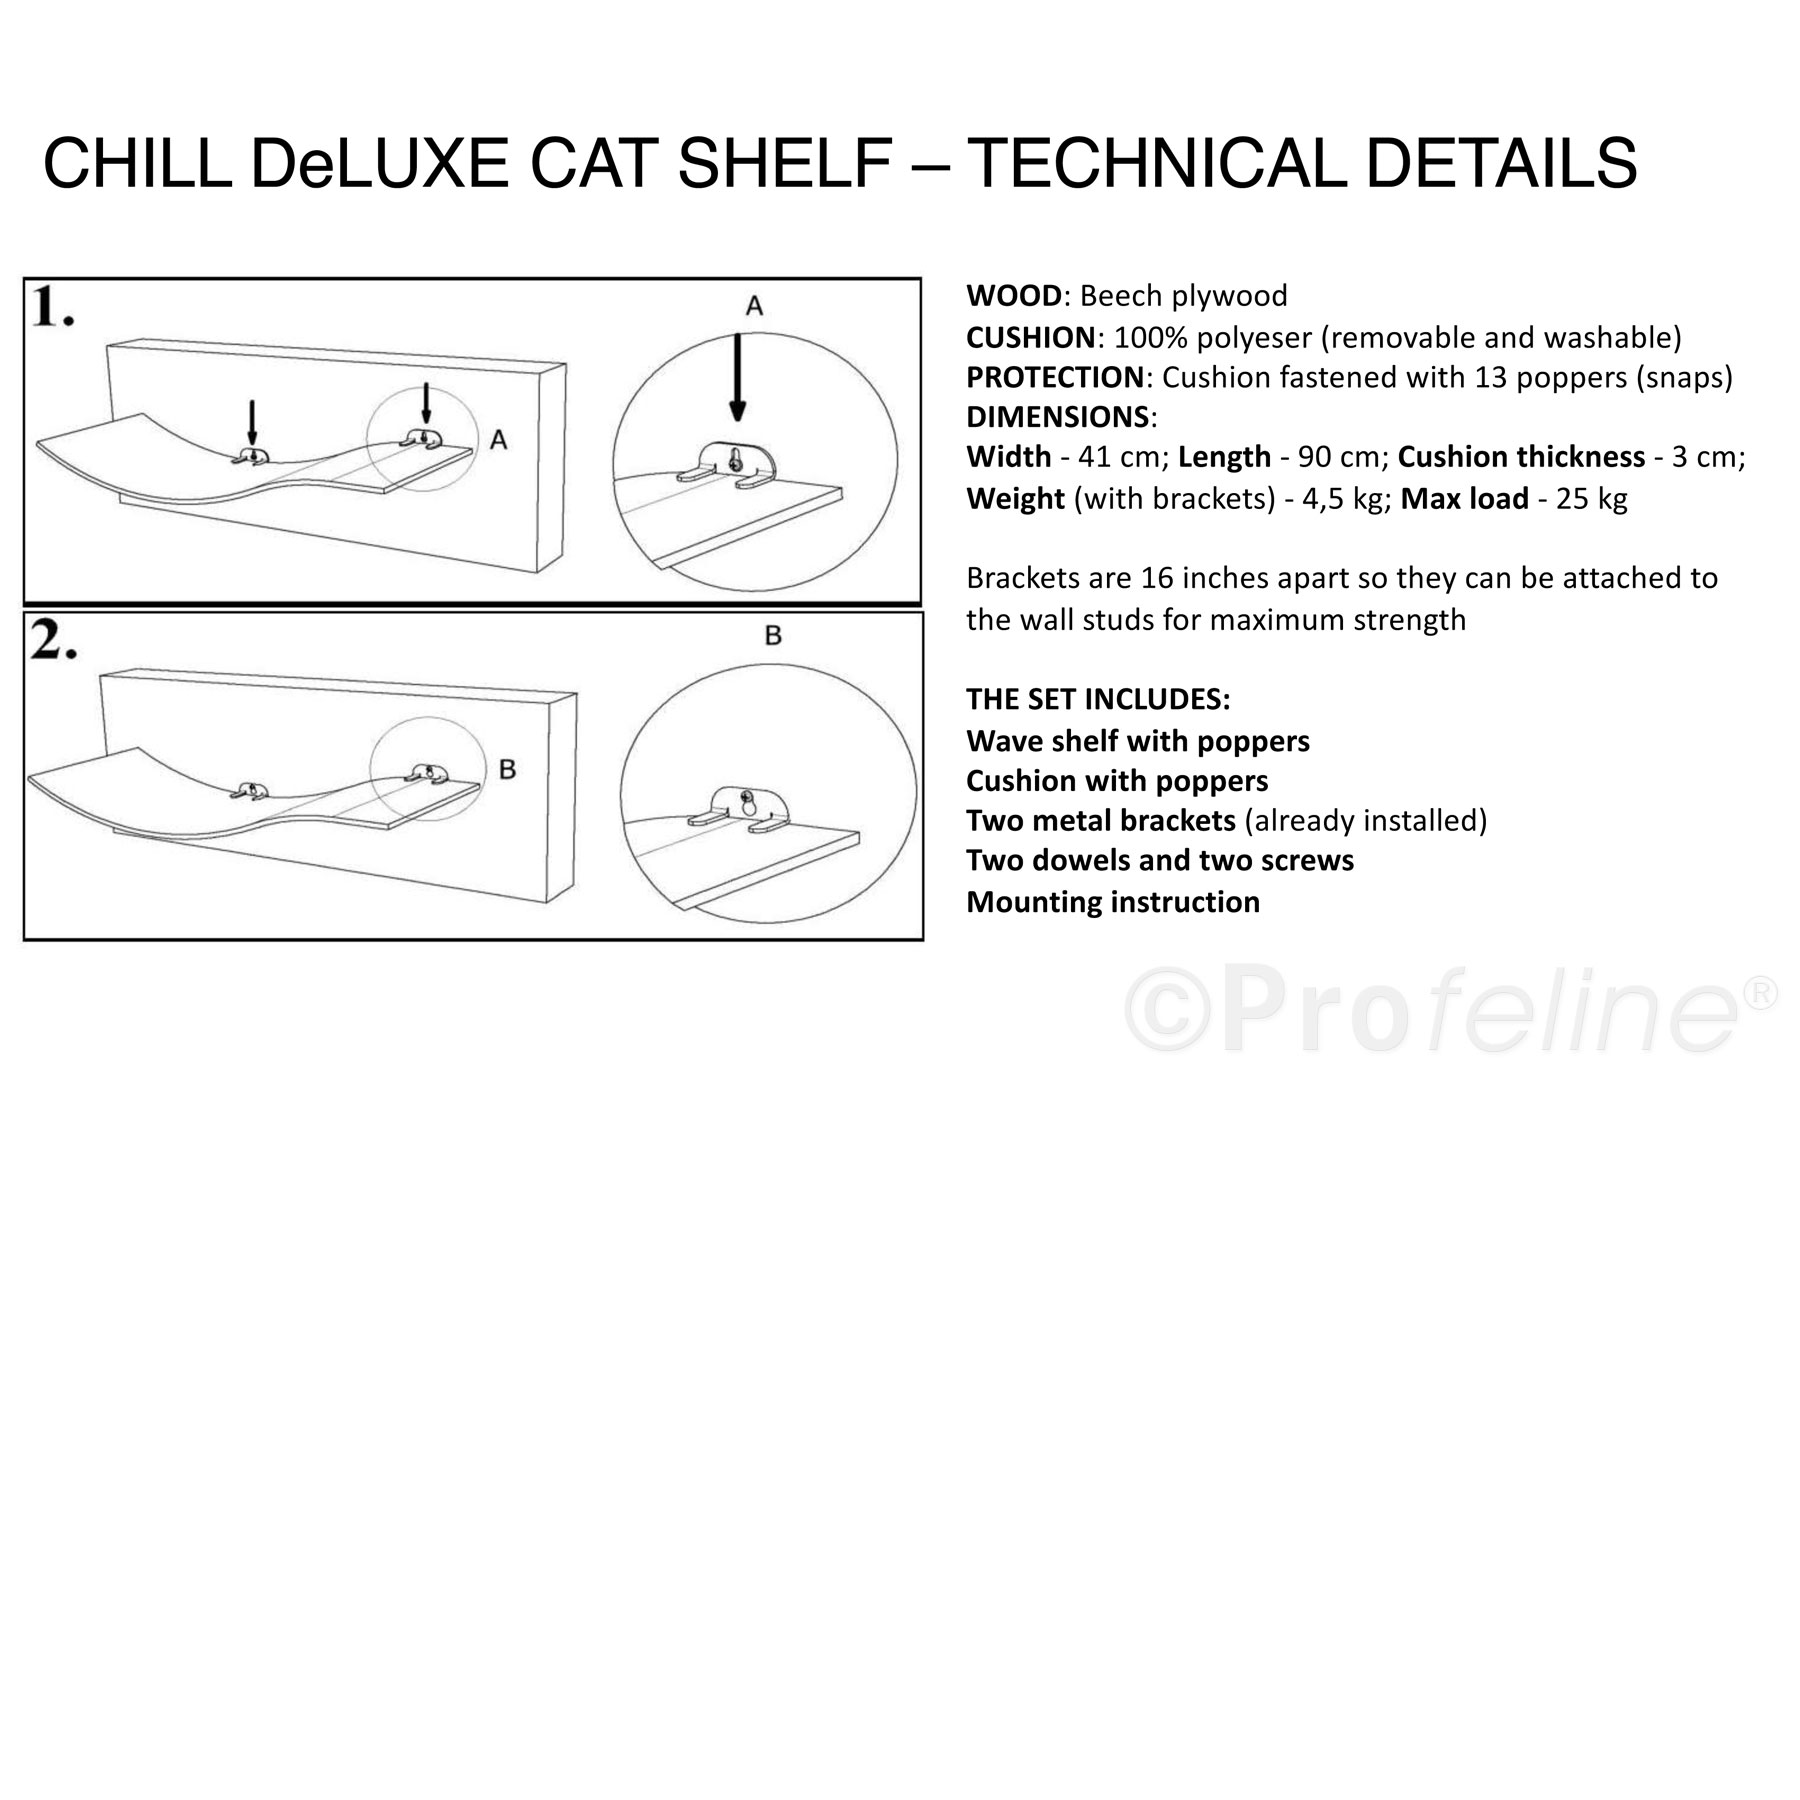 chill-deluxe-cat-shelf-technical-detail